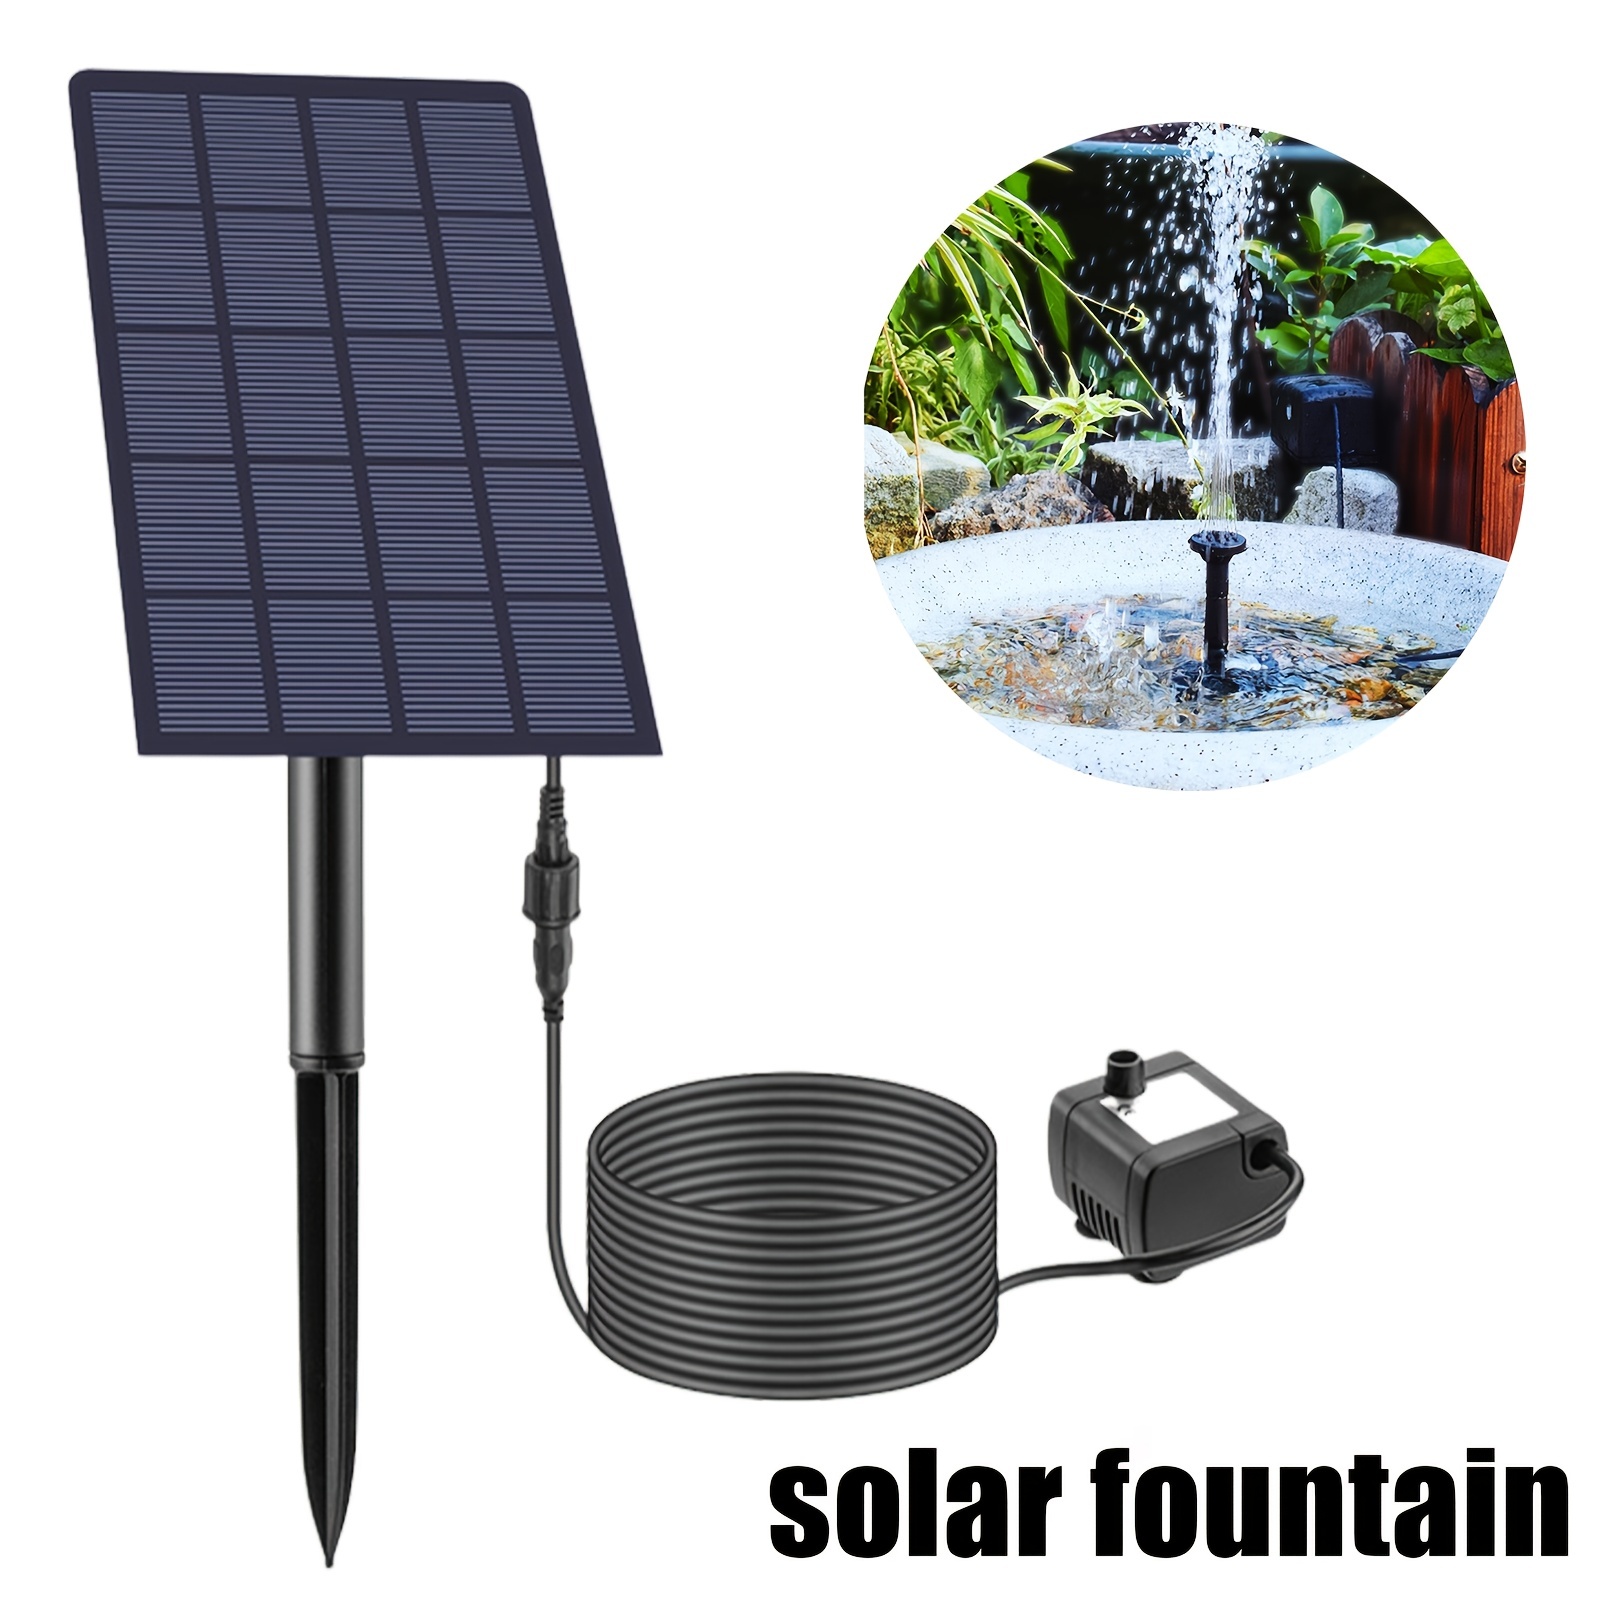 2.5W Solar Powered Water Pump Kit for Garden, Aquariums, and Backyard Pool